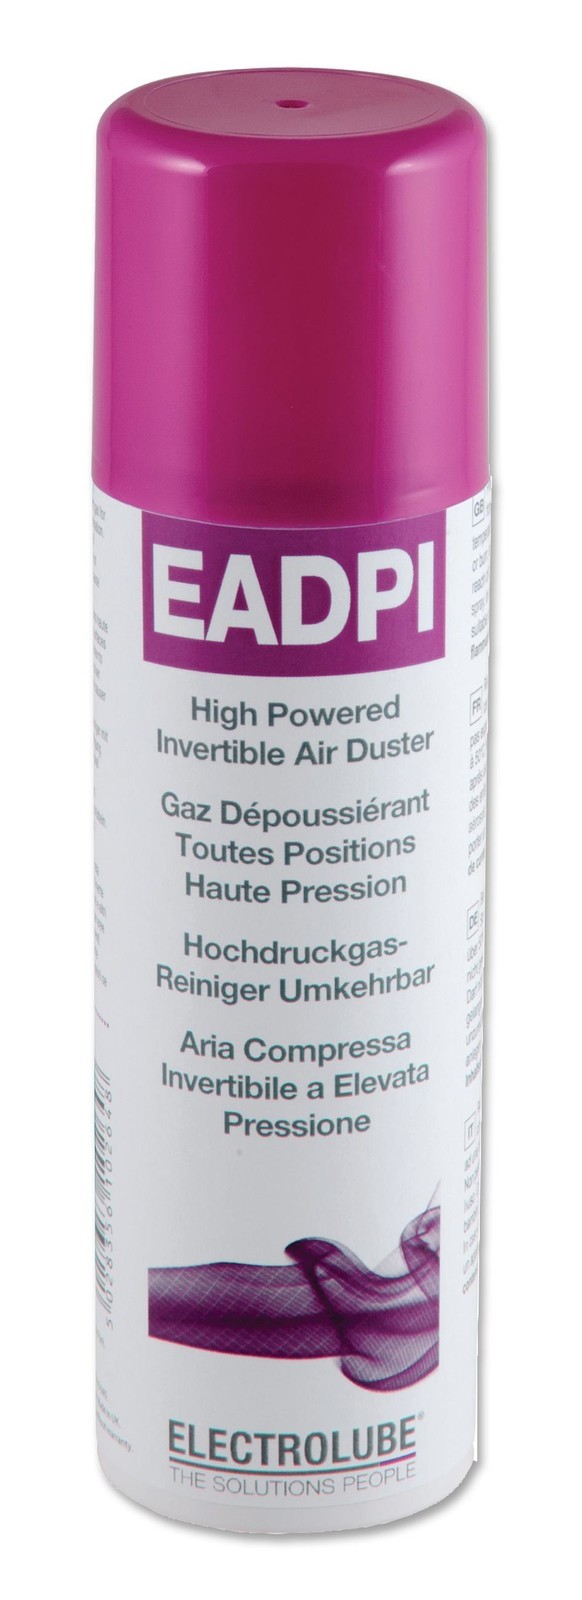 Electrolube Eadpi Airduster, Invertible High Power, Eadpi